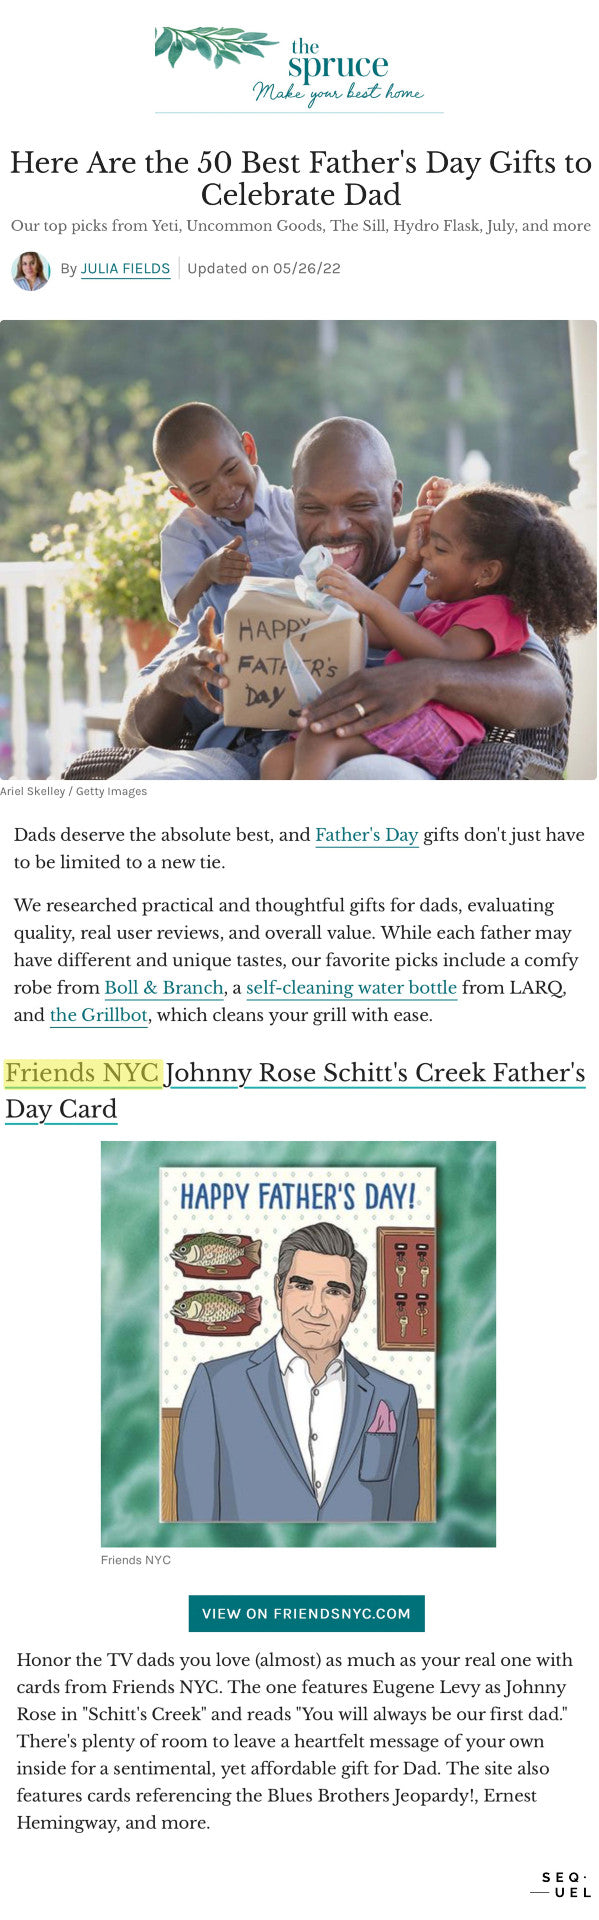 Father's Day gift ideas Johnny Rose Schitt's Creek card